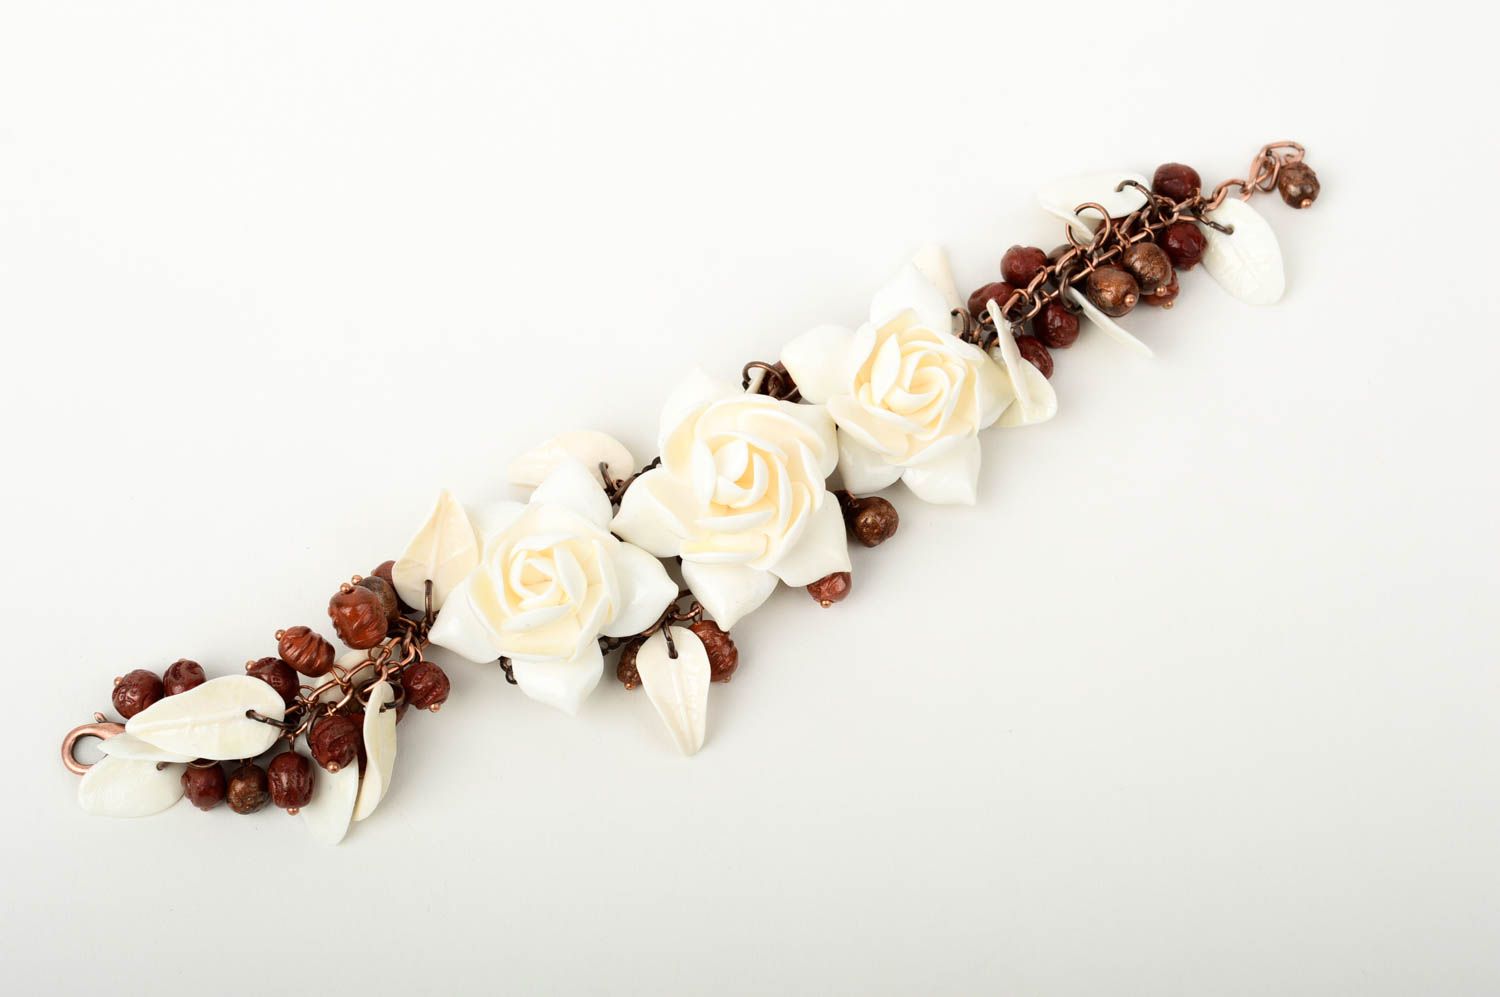 Homemade flower bracelet polymer clay designer jewelry fashion accessories photo 1